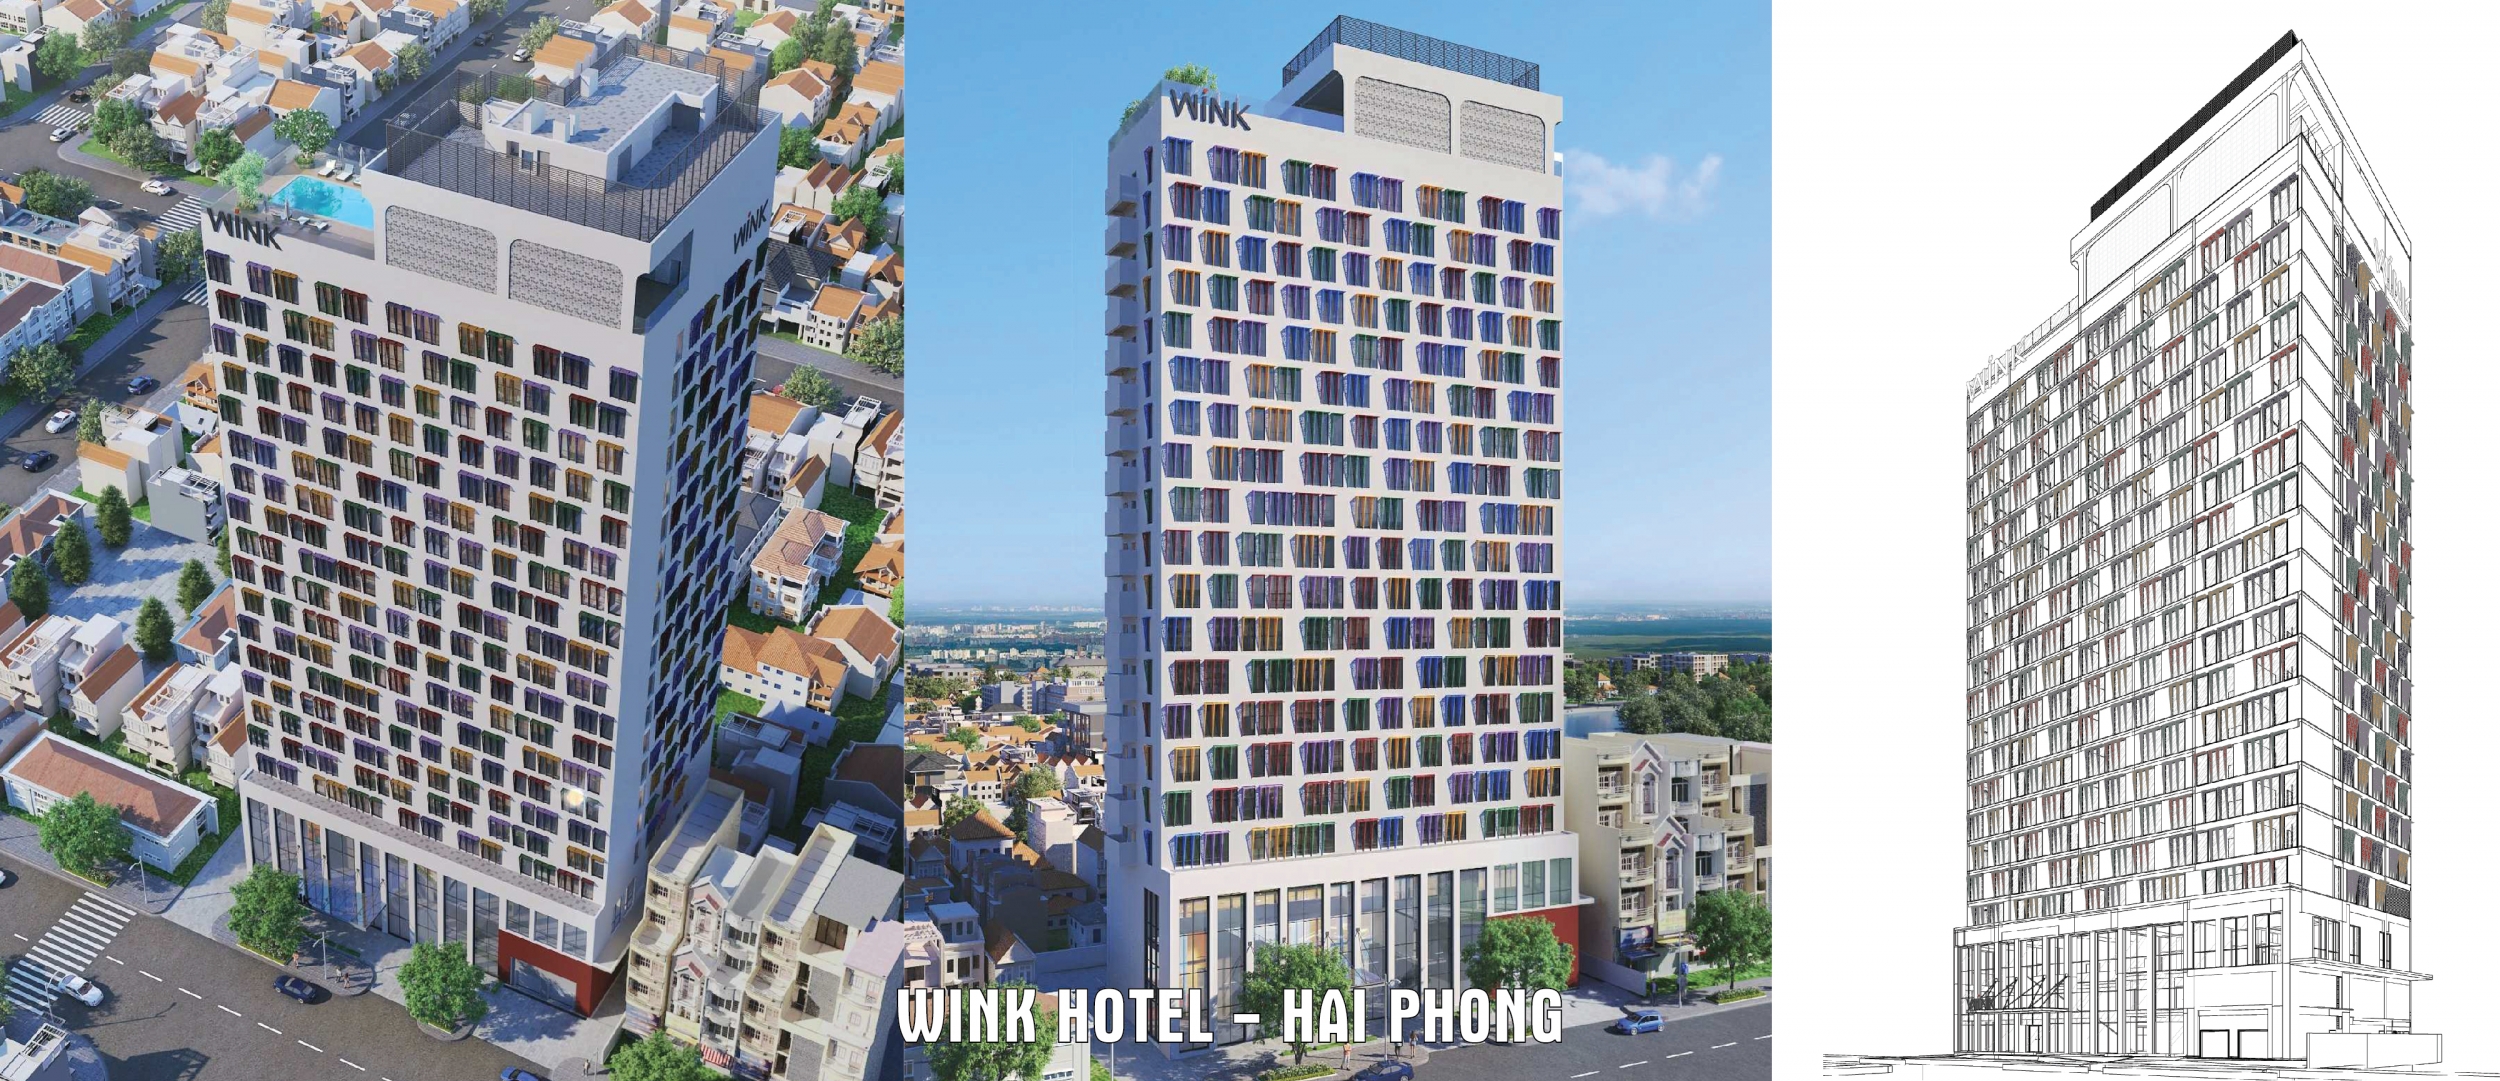 WINK HOTEL - HAI PHONG